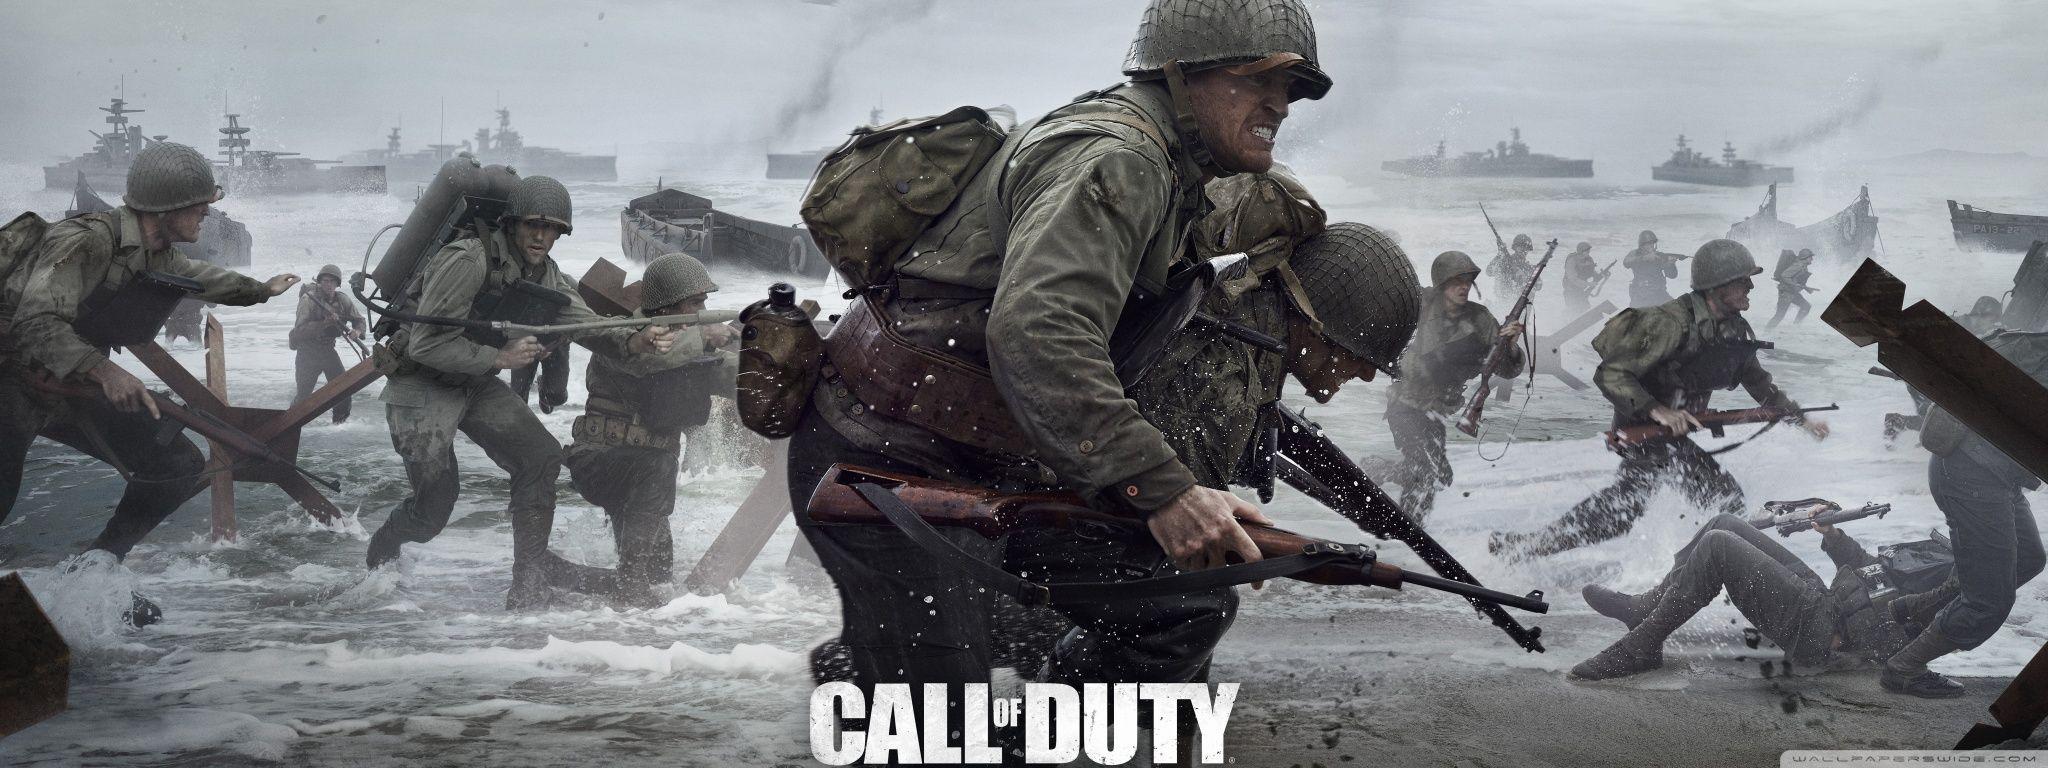 Call of Duty WWII 2017 Video Game ❤ 4K HD Desktop Wallpaper for 4K